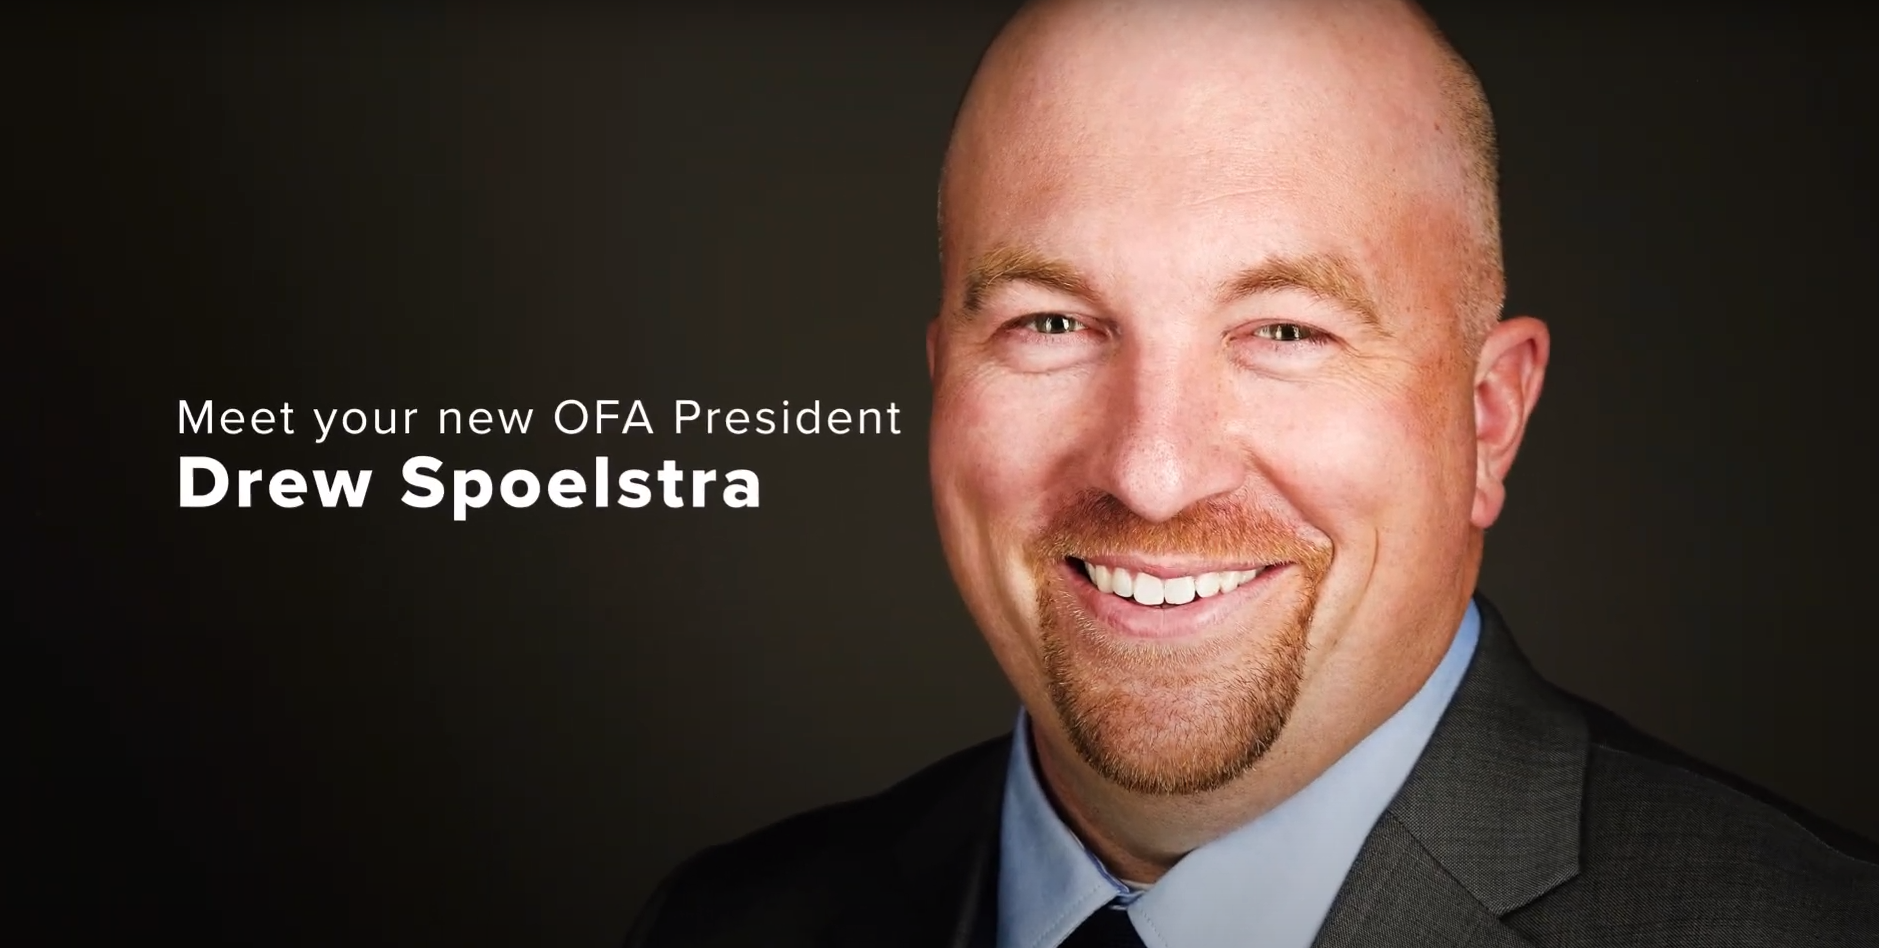 Load video: Meet Your New OFA President Drew Spoelstra